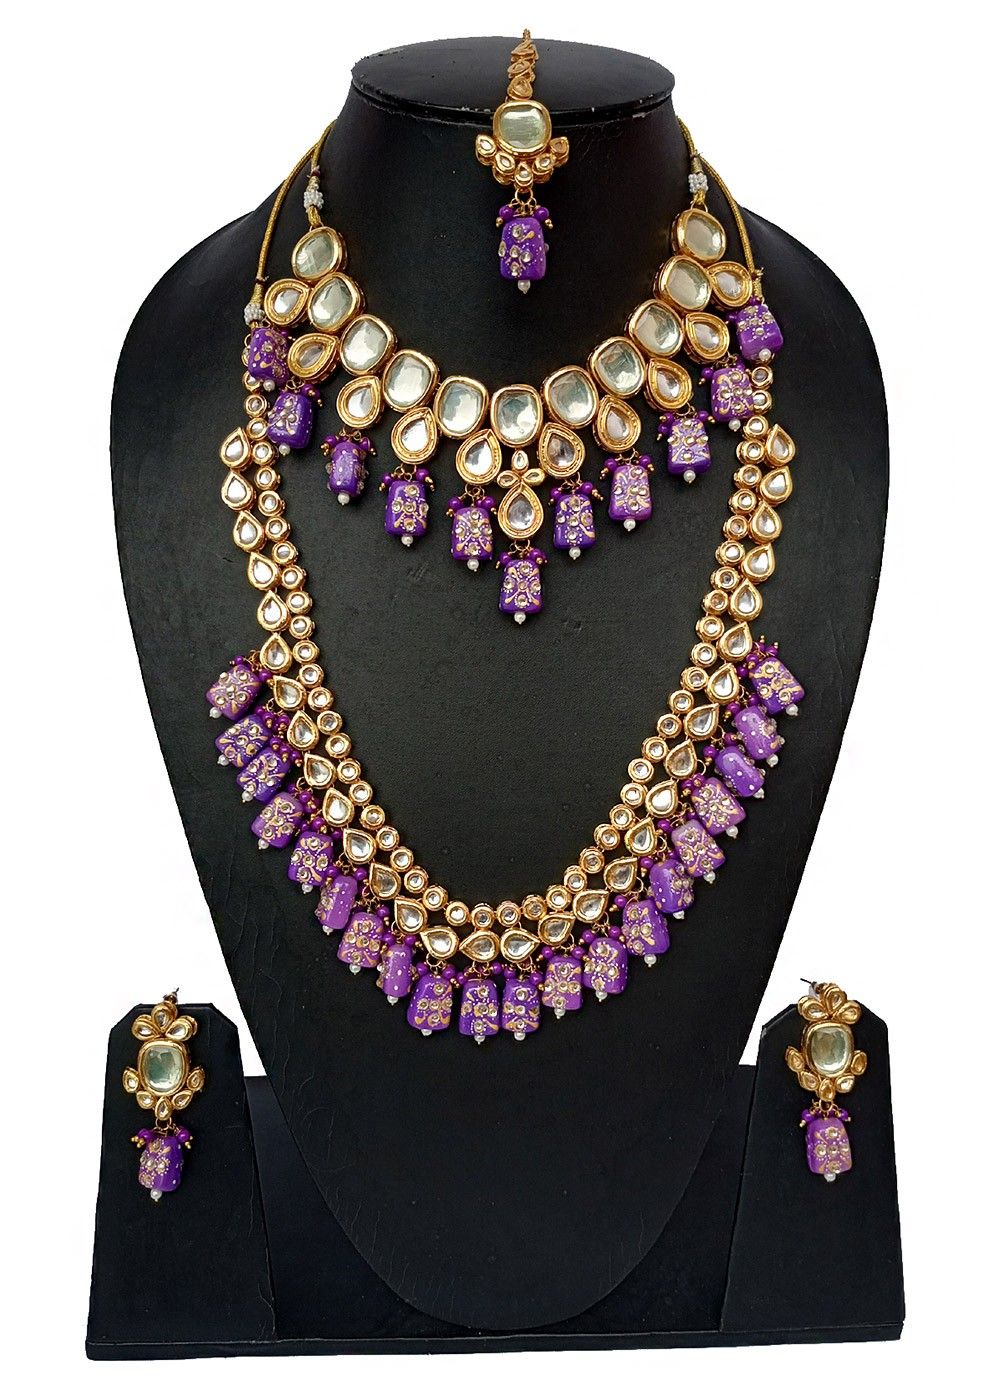 Charming purple American diamond necklace set